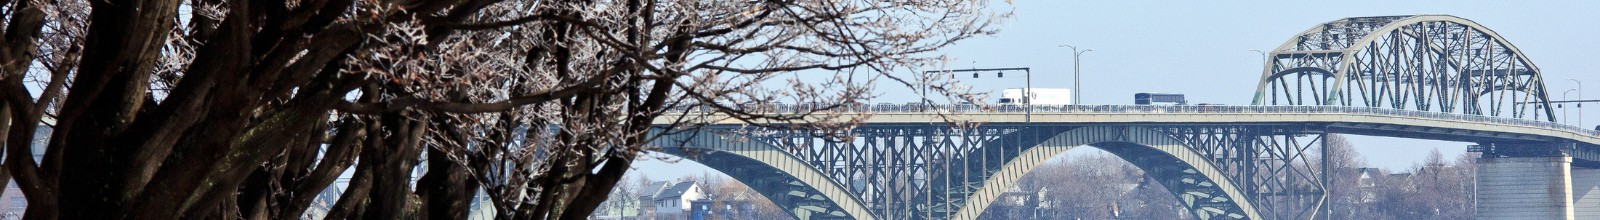 A The Peace Bridge over the Niagara River in winter 